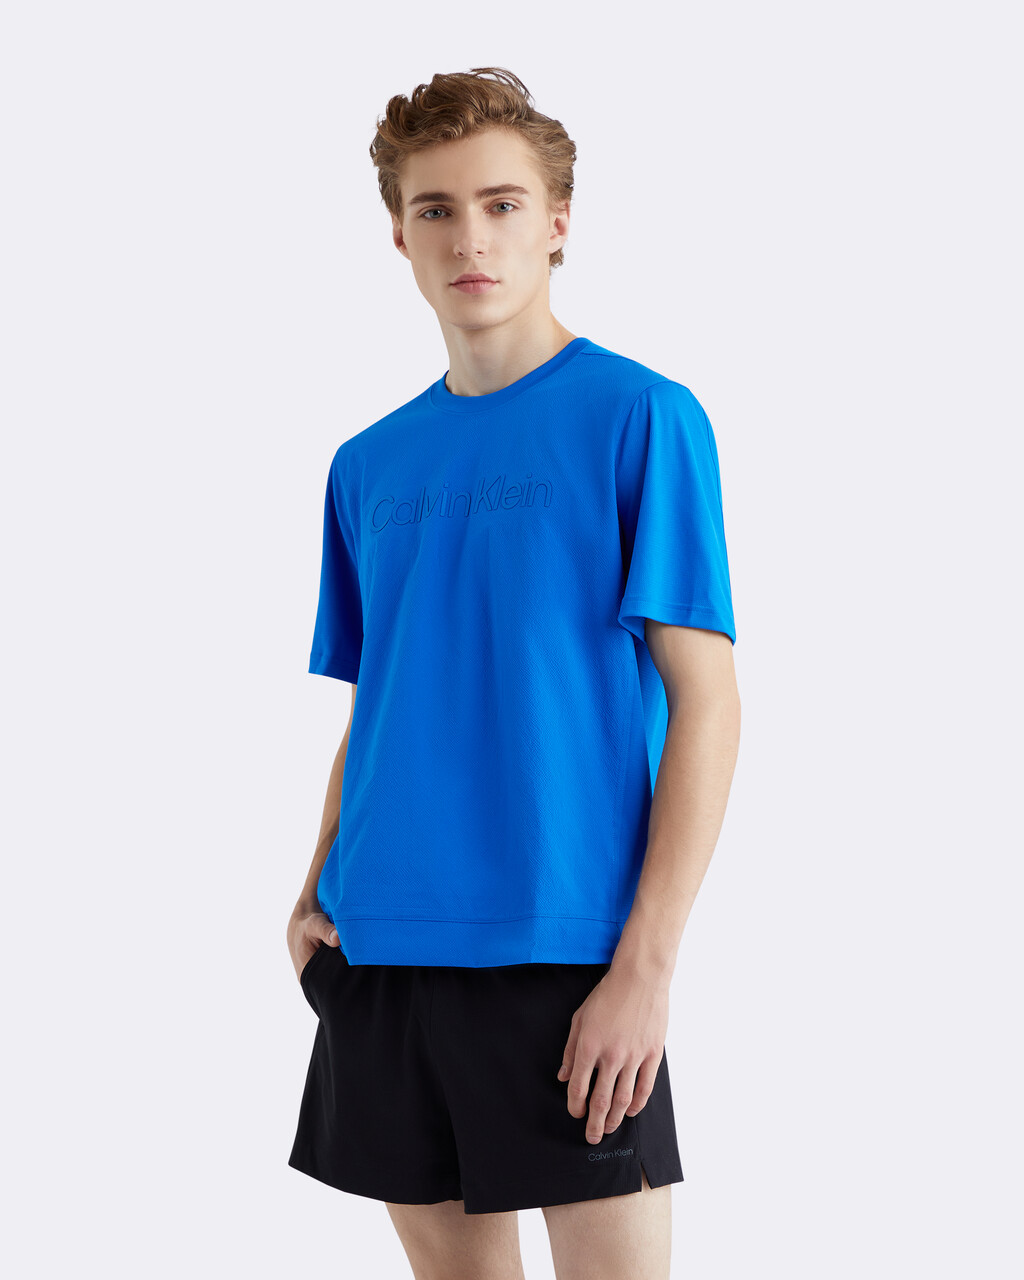 紋理健身T恤, LAPIS BLUE, hi-res